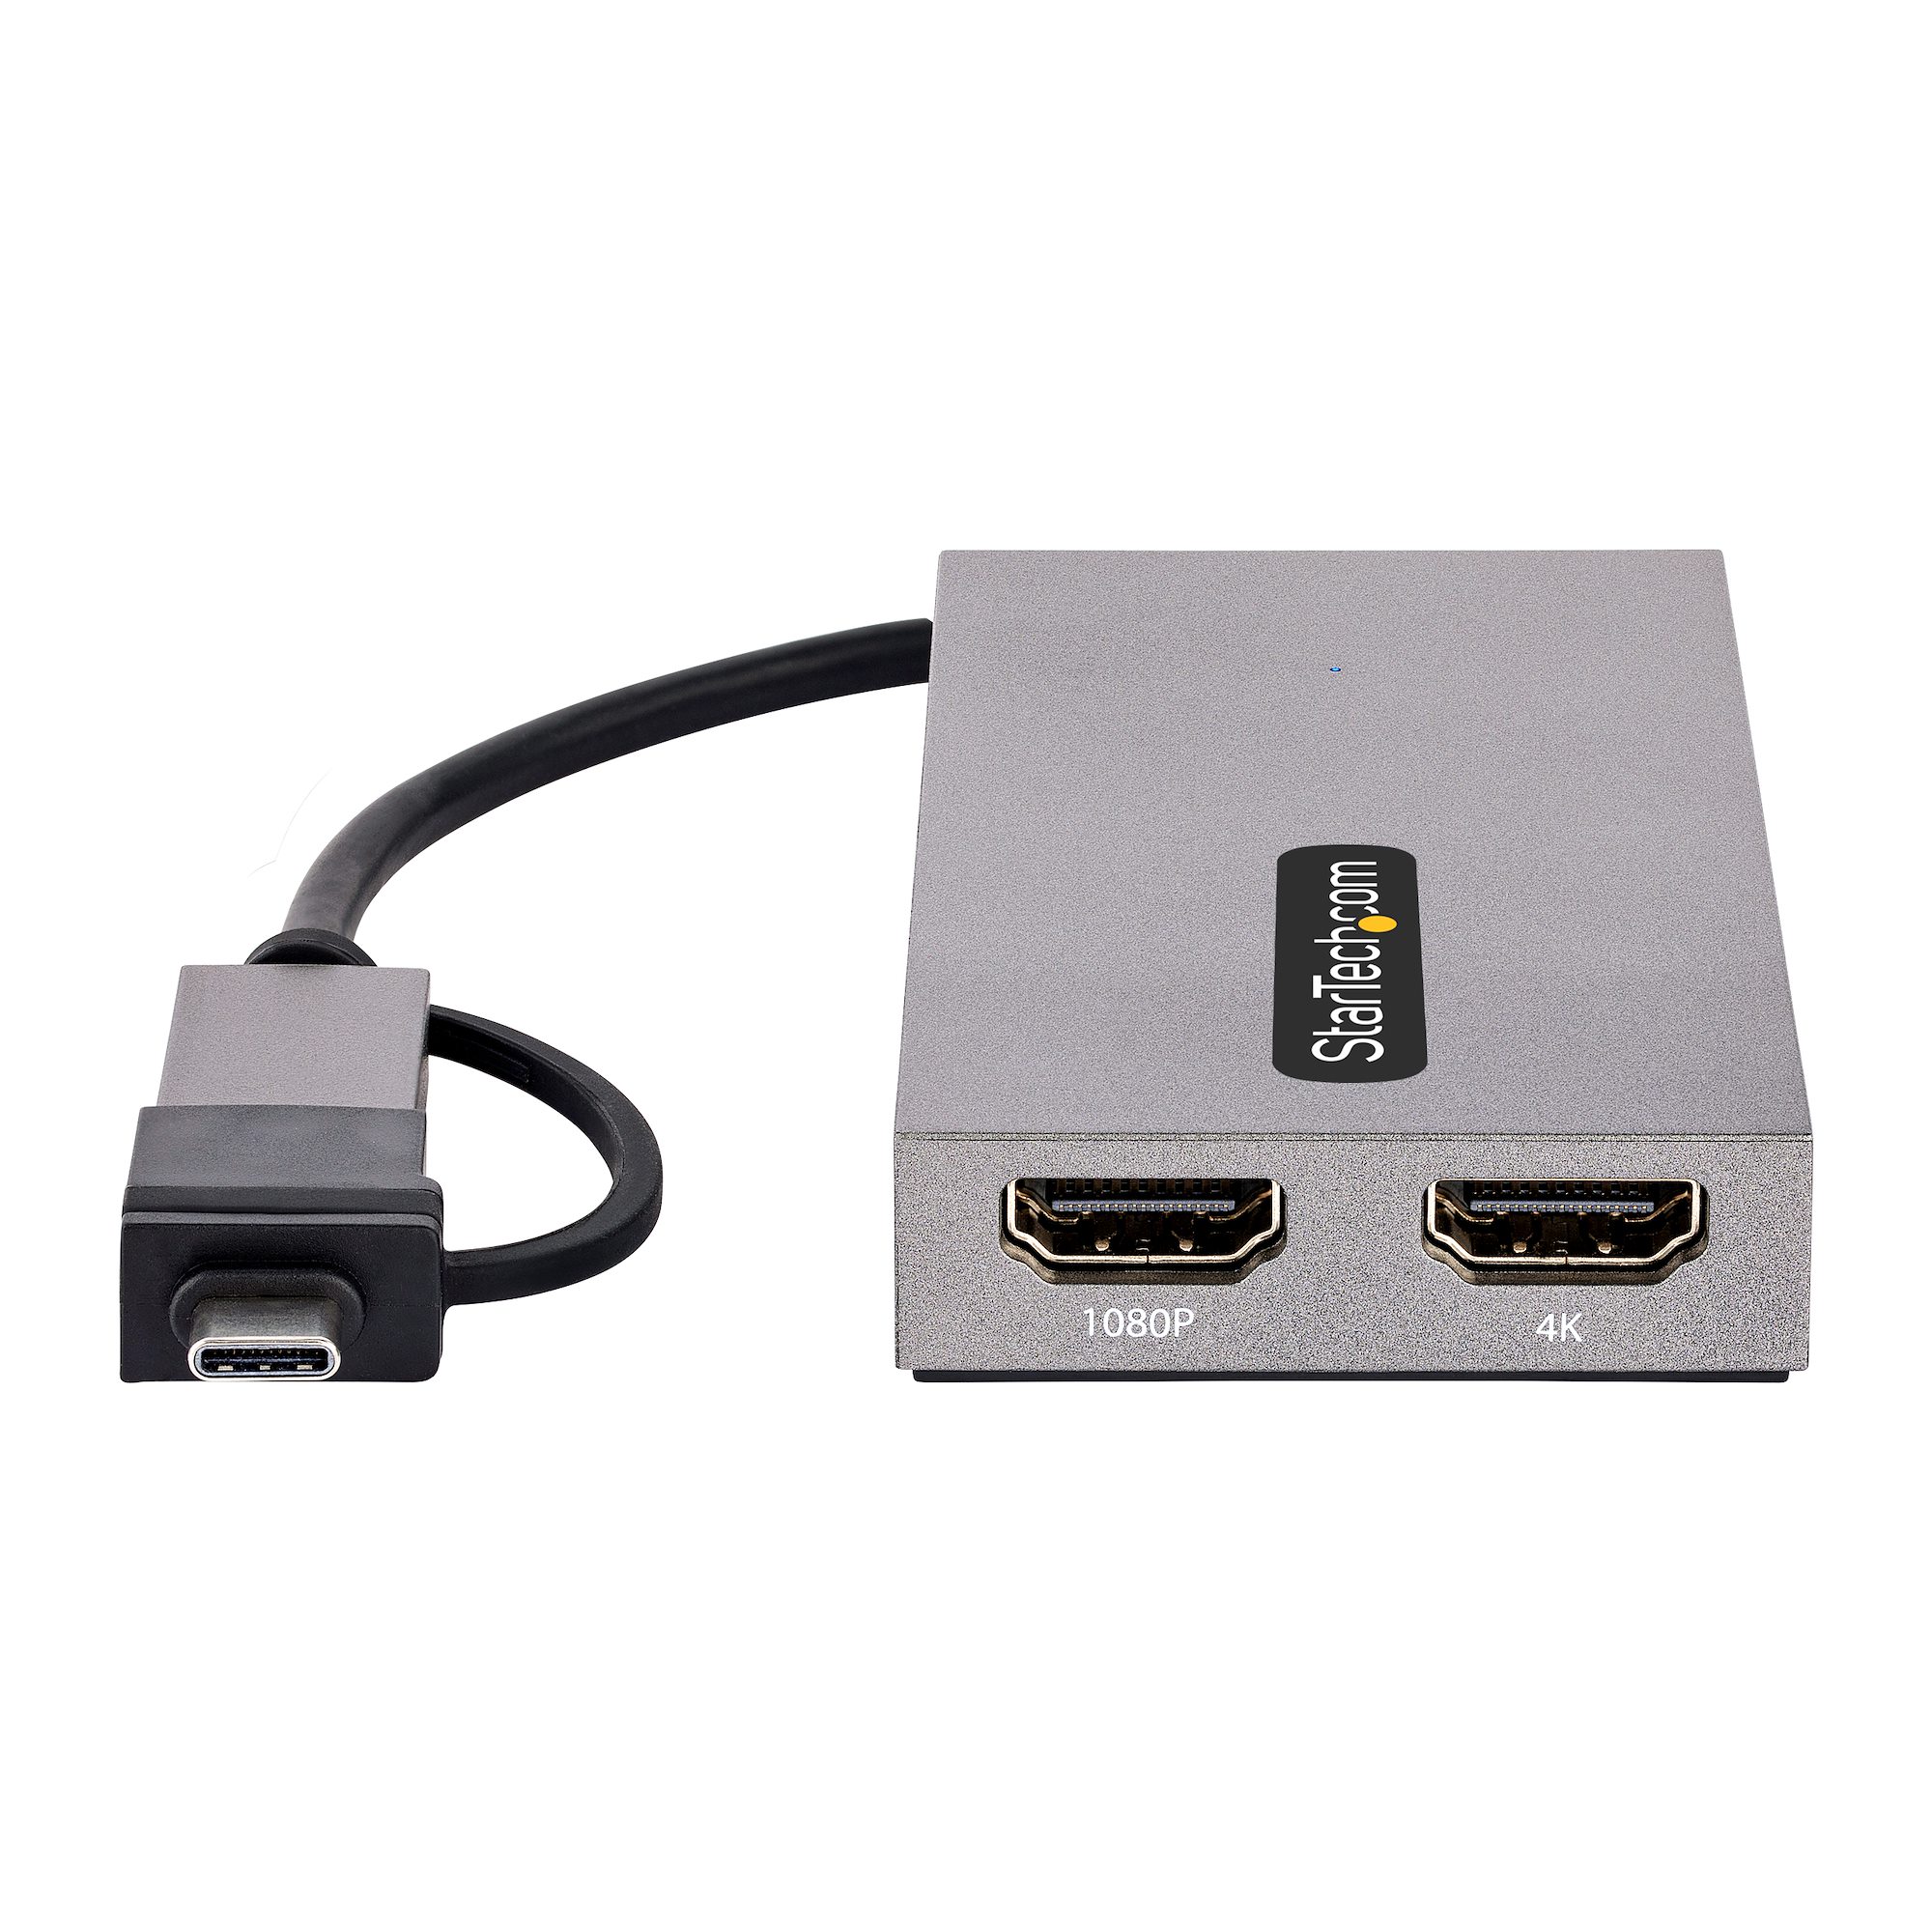 USB 3.0 デュアルDisplayPortアダプタ 4K/60Hz USB 3.0 (5Gbps) USB 